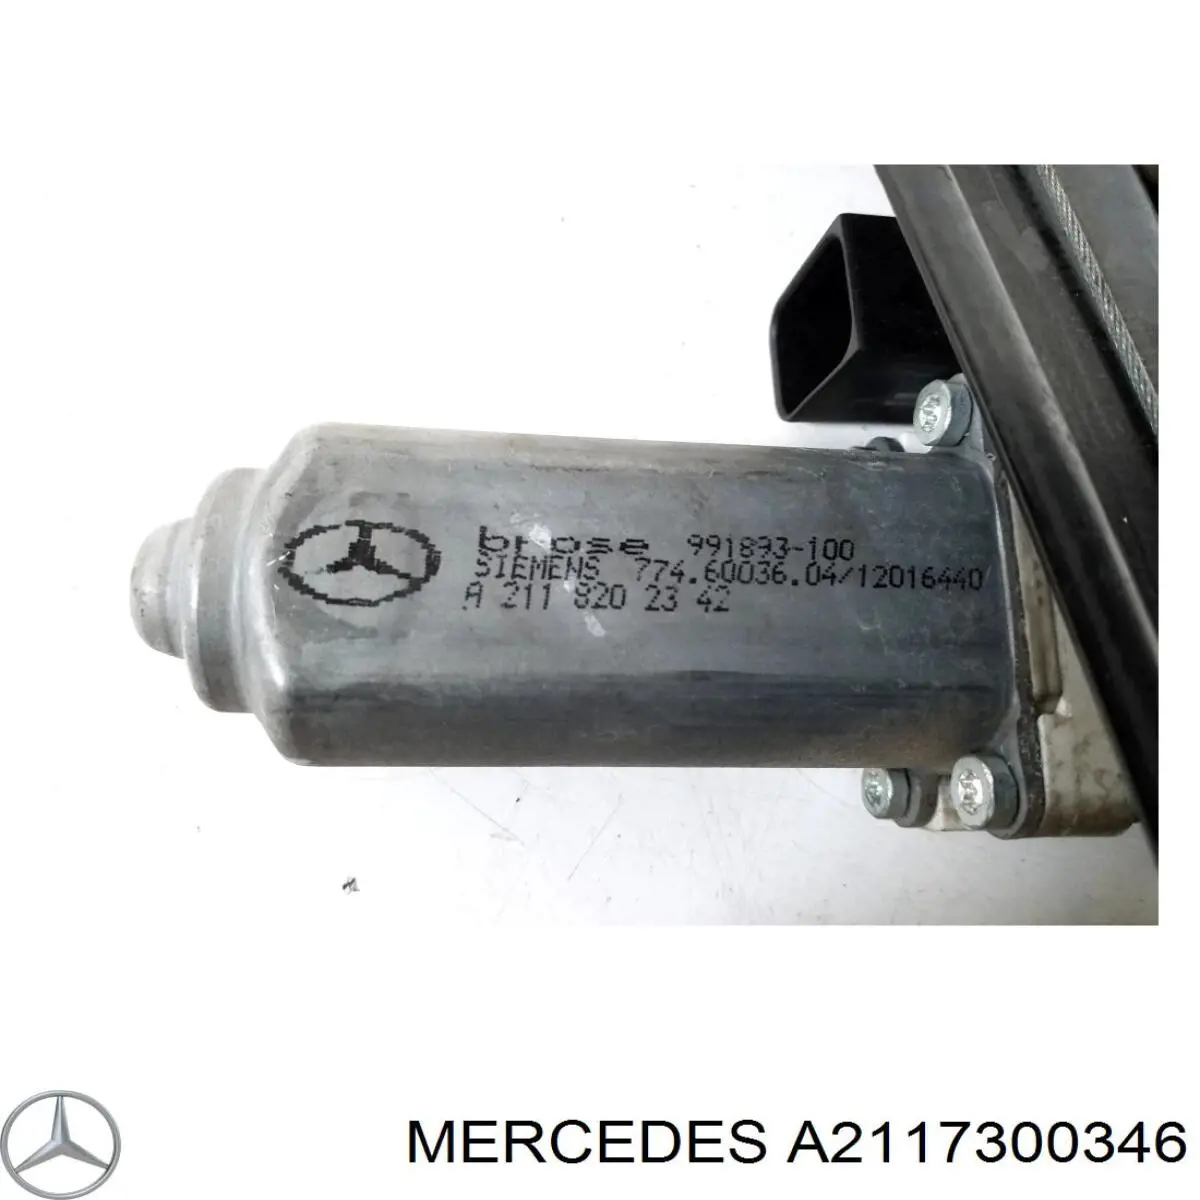 A2117300346 Mercedes mecanismo de acionamento de vidro da porta traseira esquerda